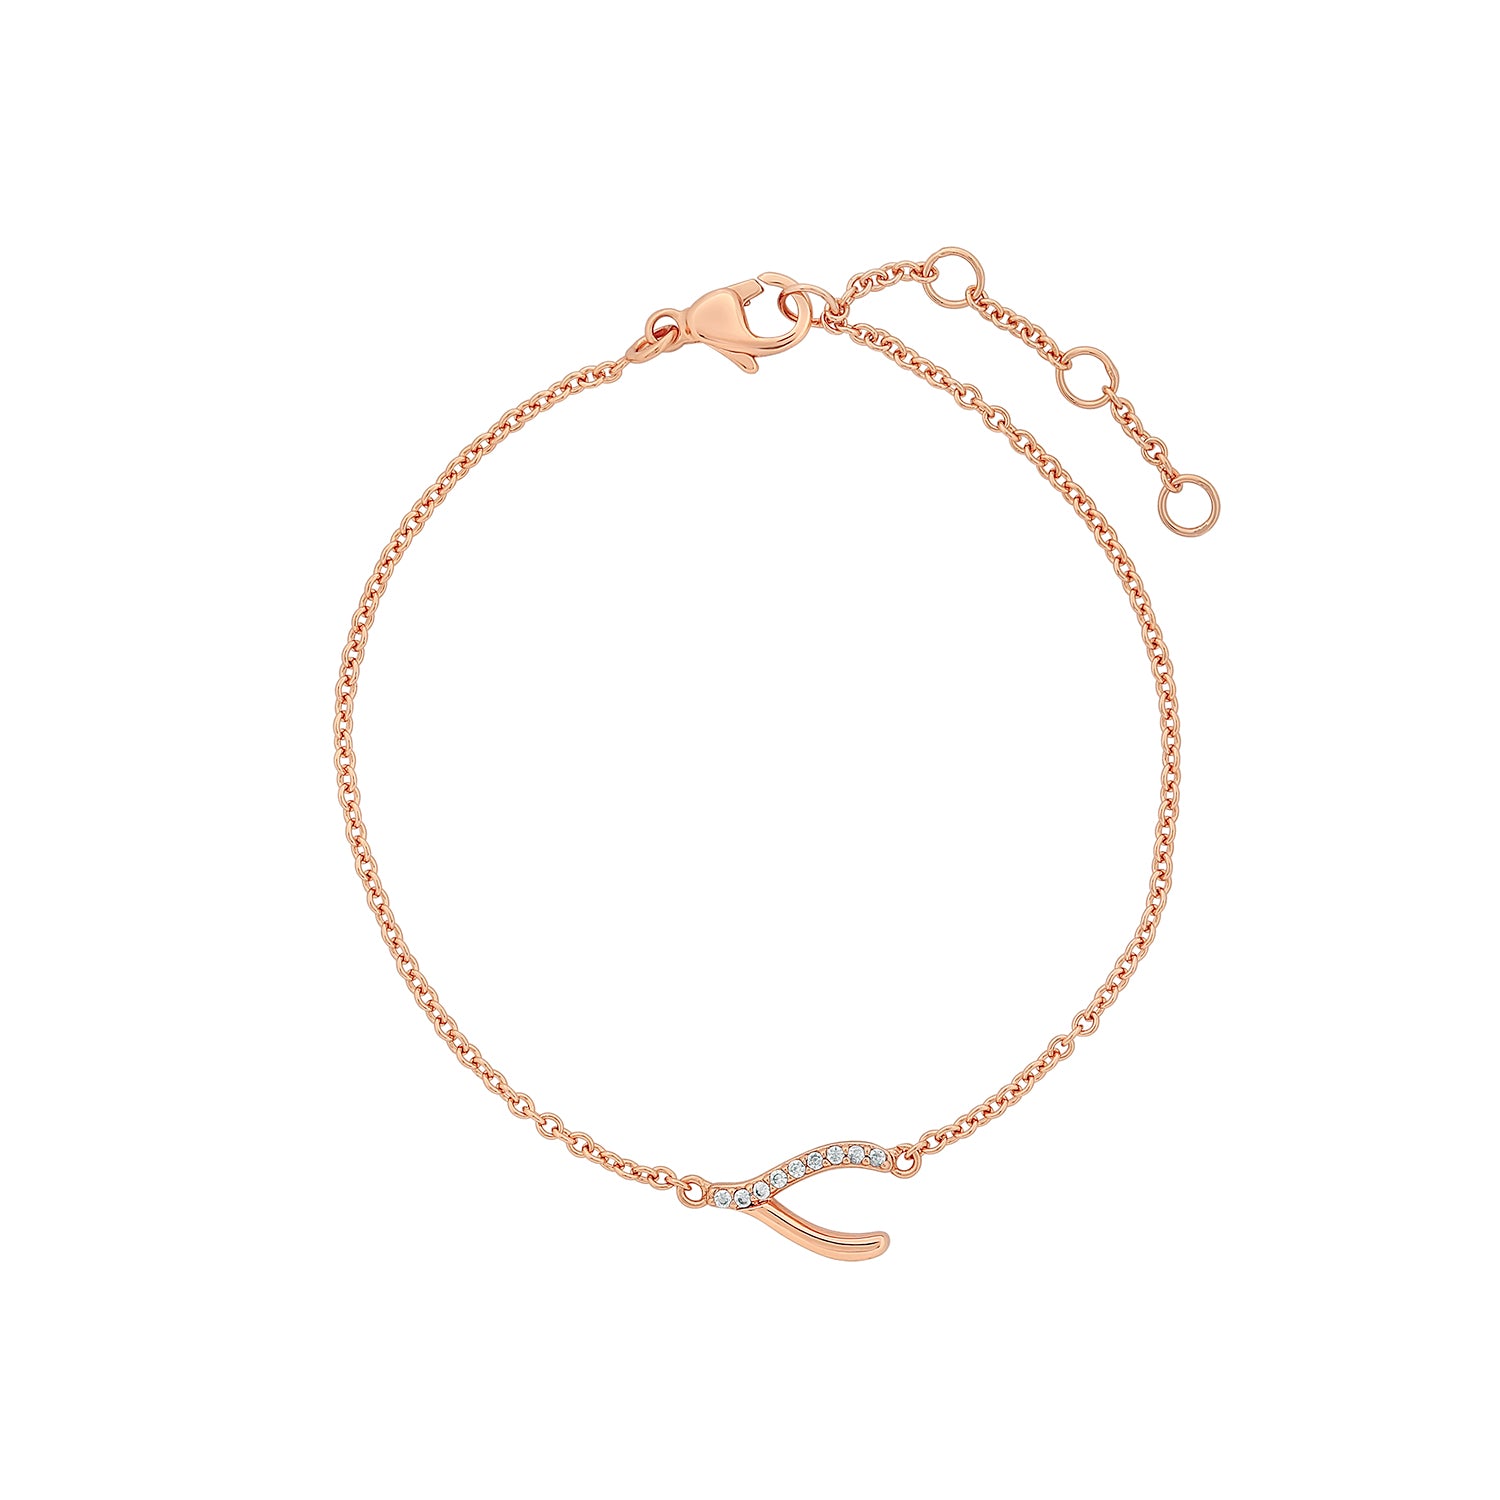 Elegant and minimalist rose gold wishbone pendant bracelet set with cubic zirconia stones.